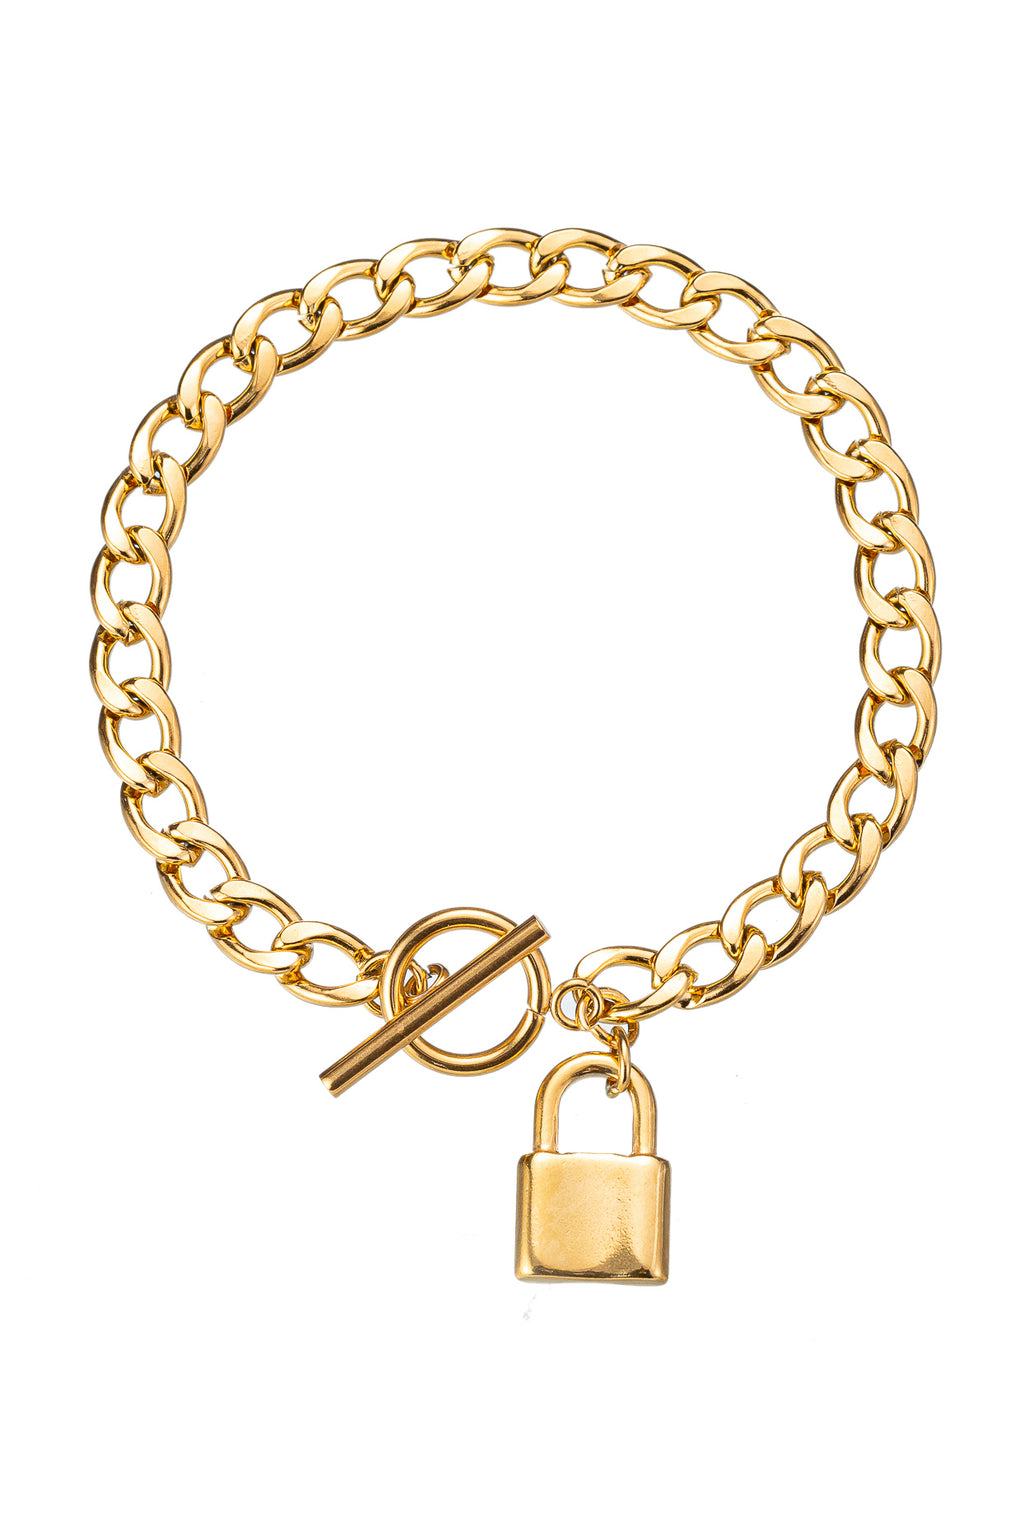 Gold tone titanium chain bracelet with a lock pendant.